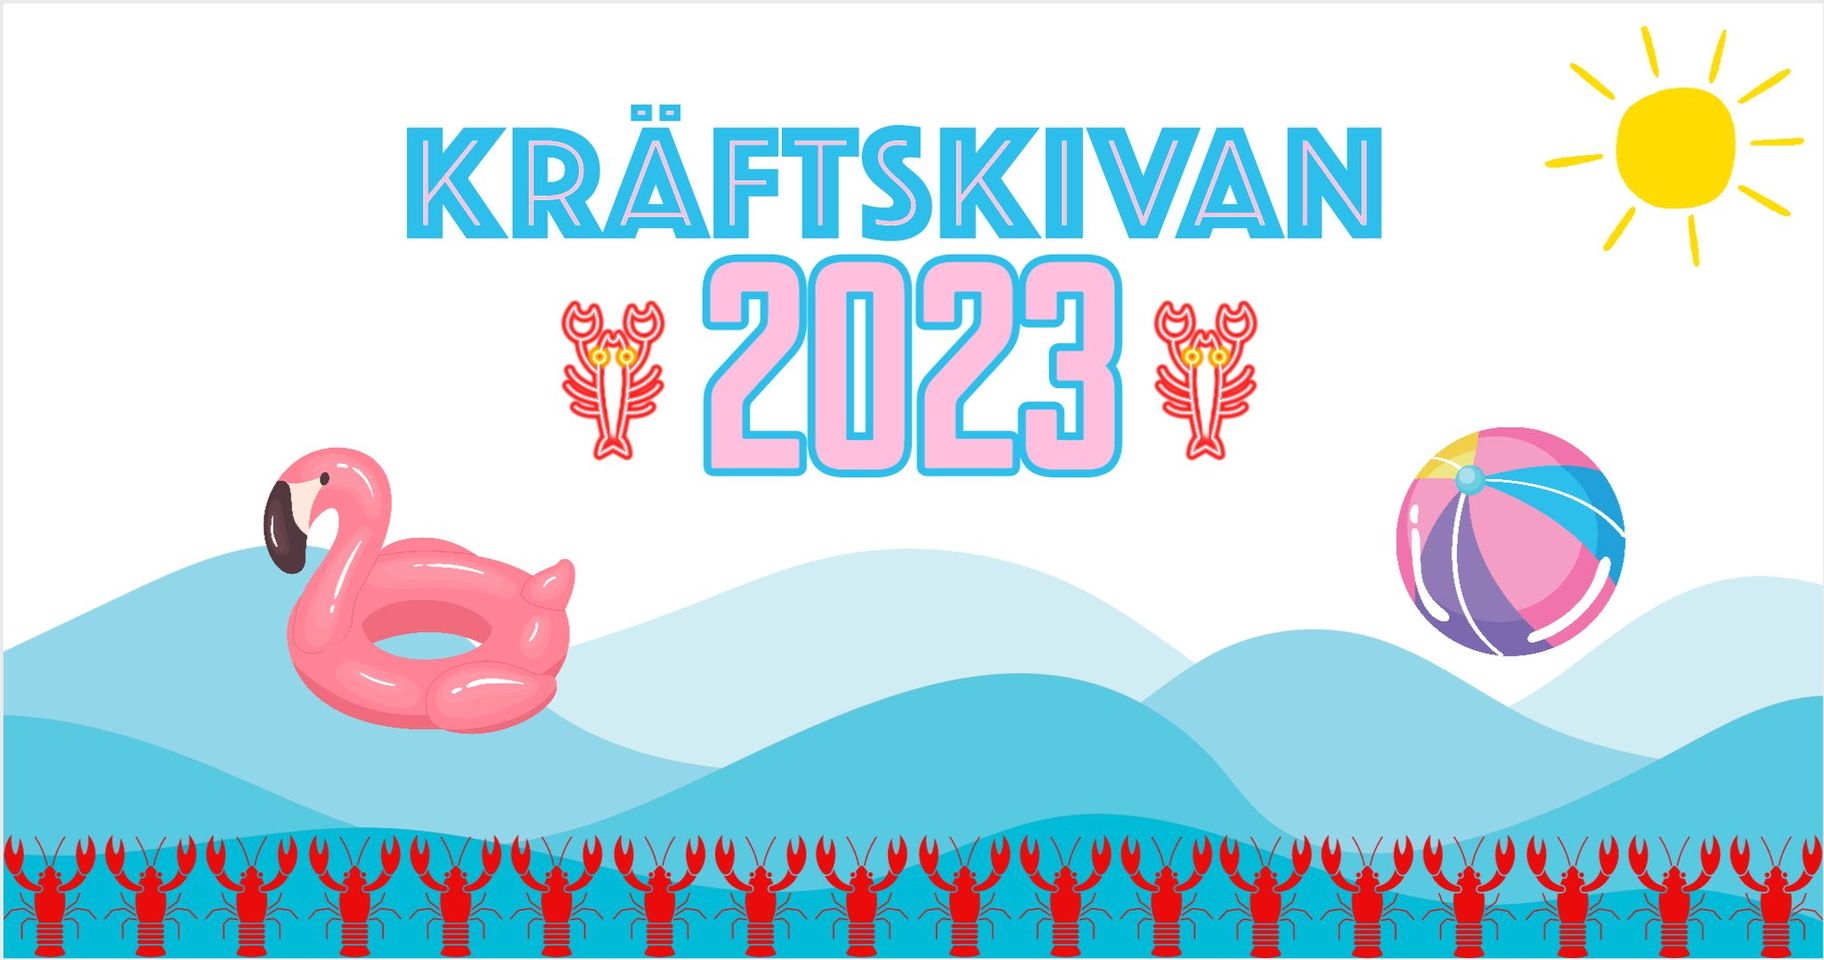 Crayfish Party 2023